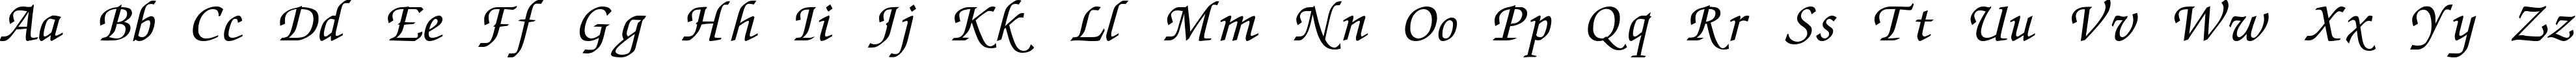 Пример написания английского алфавита шрифтом Chancery